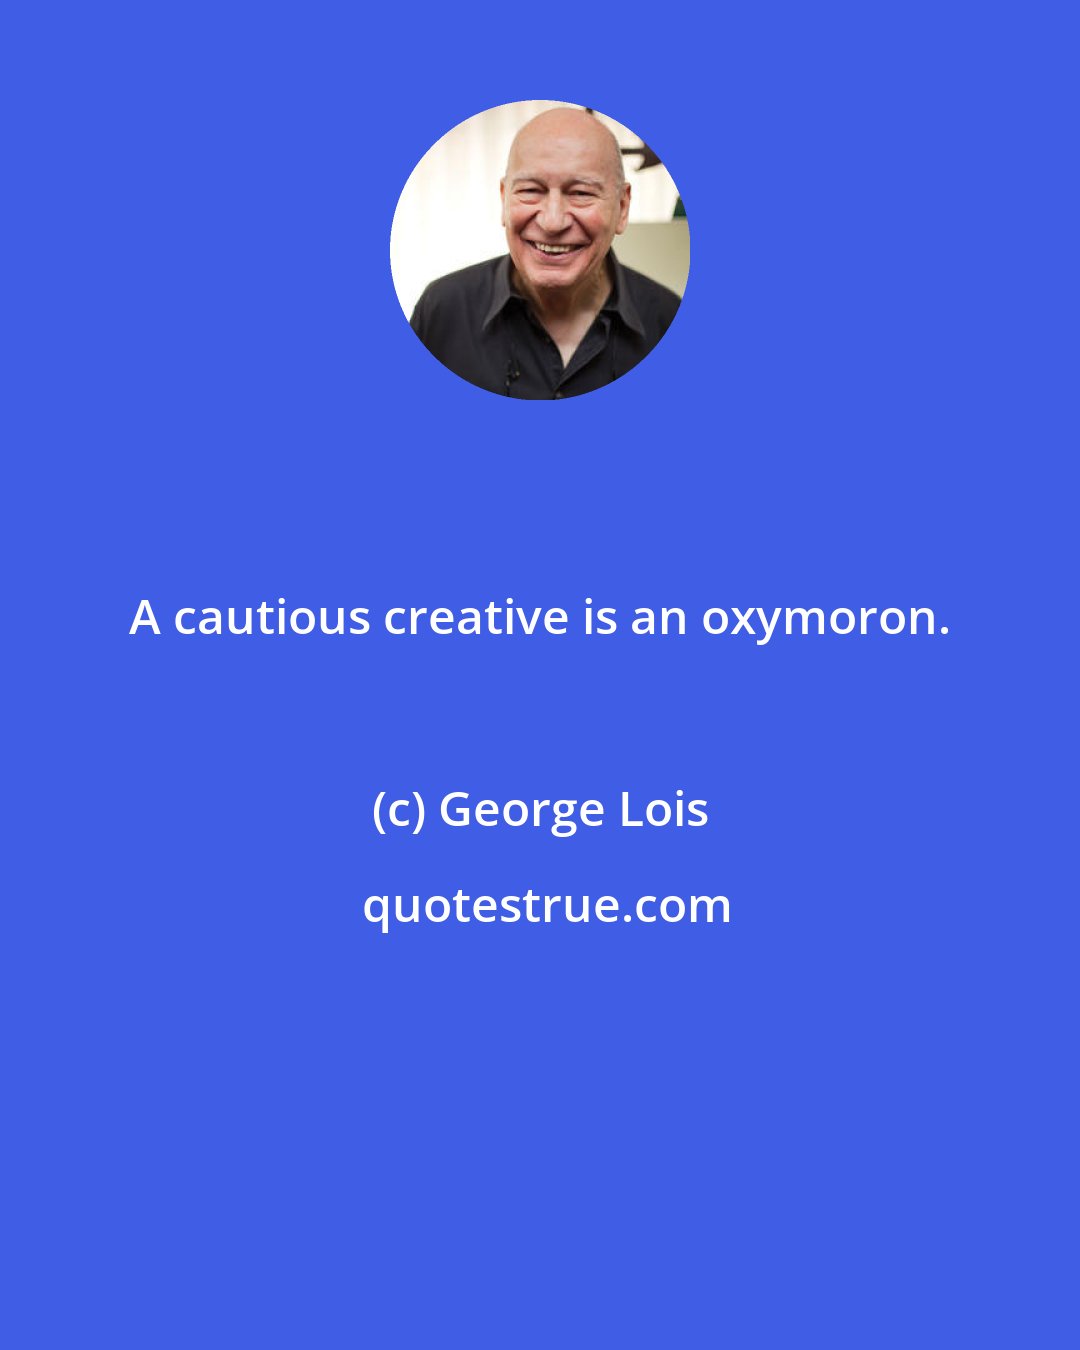 George Lois: A cautious creative is an oxymoron.